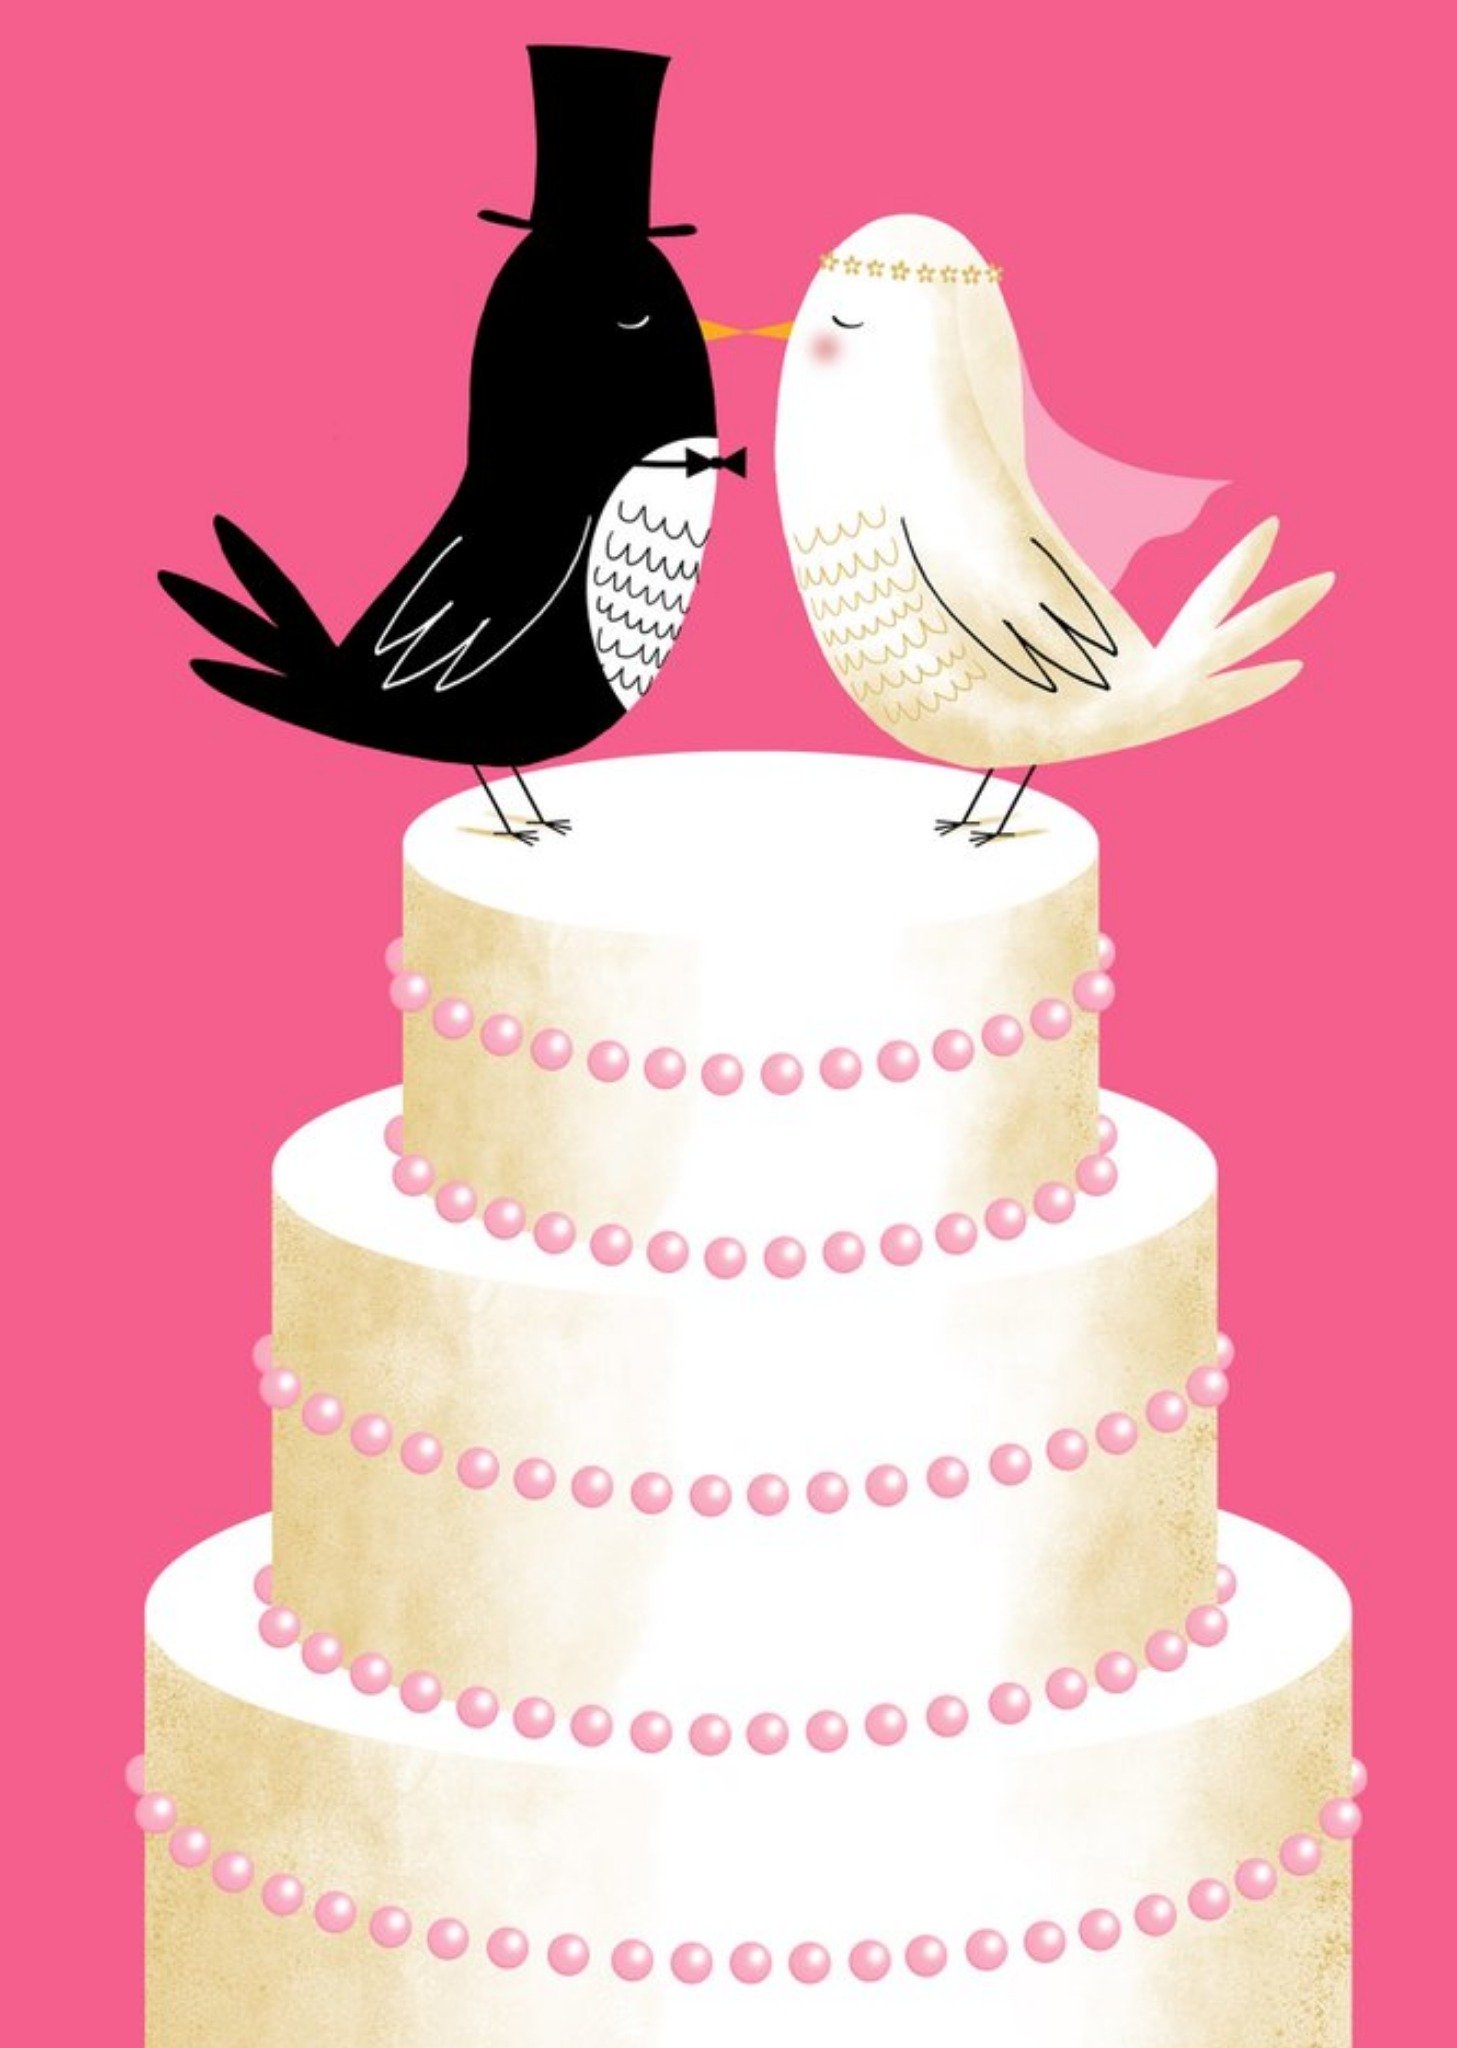 Moonpig Modern Cute Illustration Love Birds Wedding Cake Wedding Card Ecard